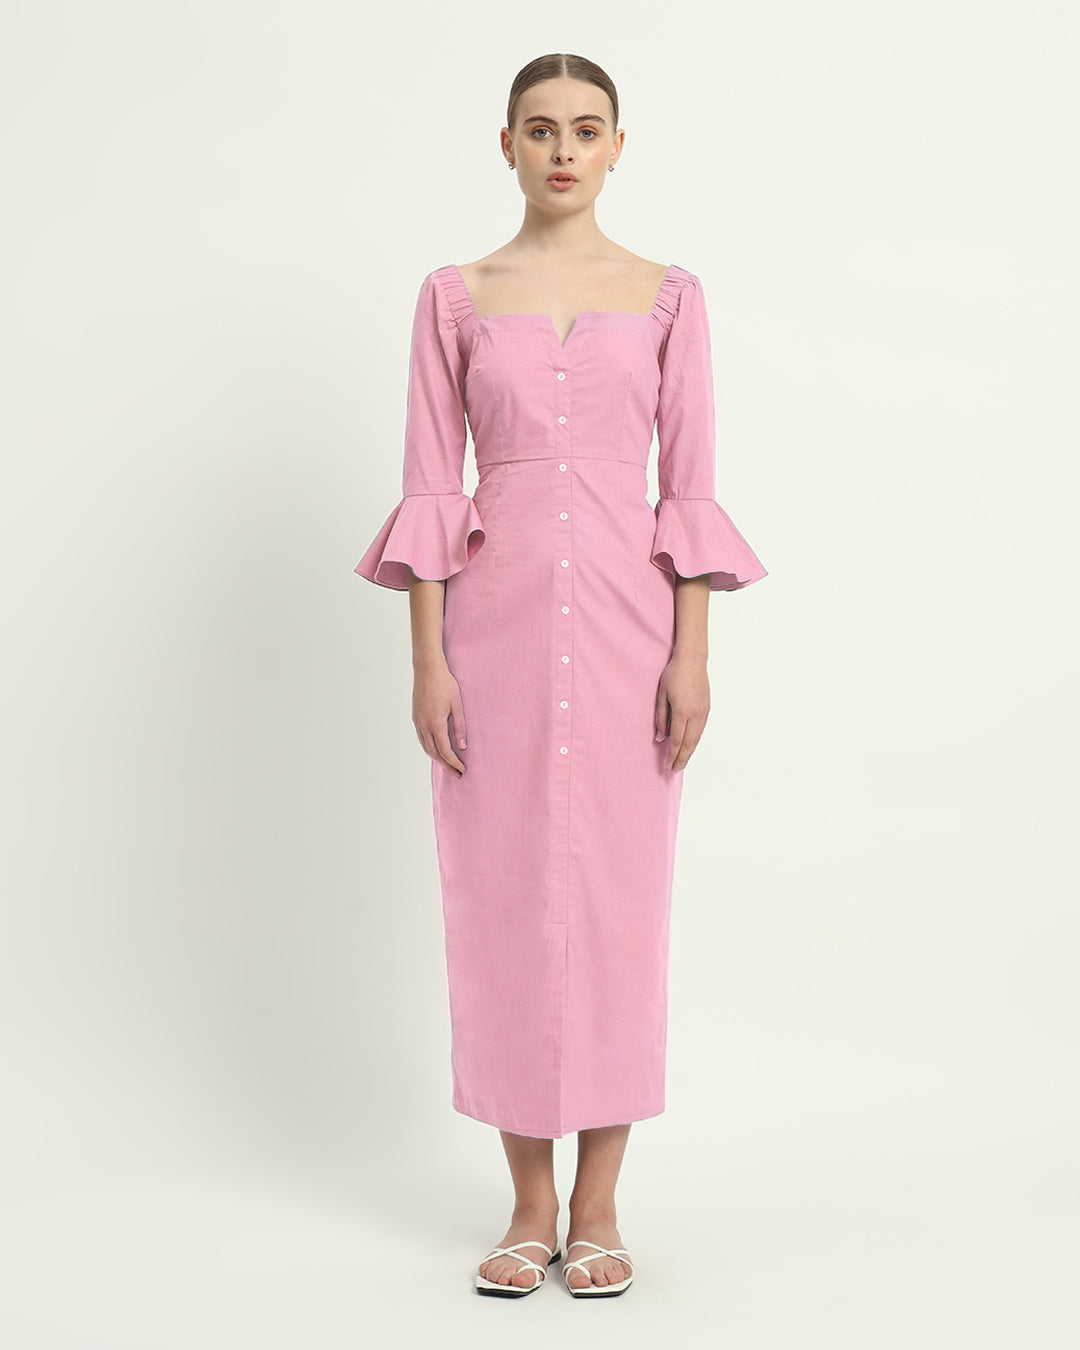 The Fondant Pink Rosendale Cotton Dress